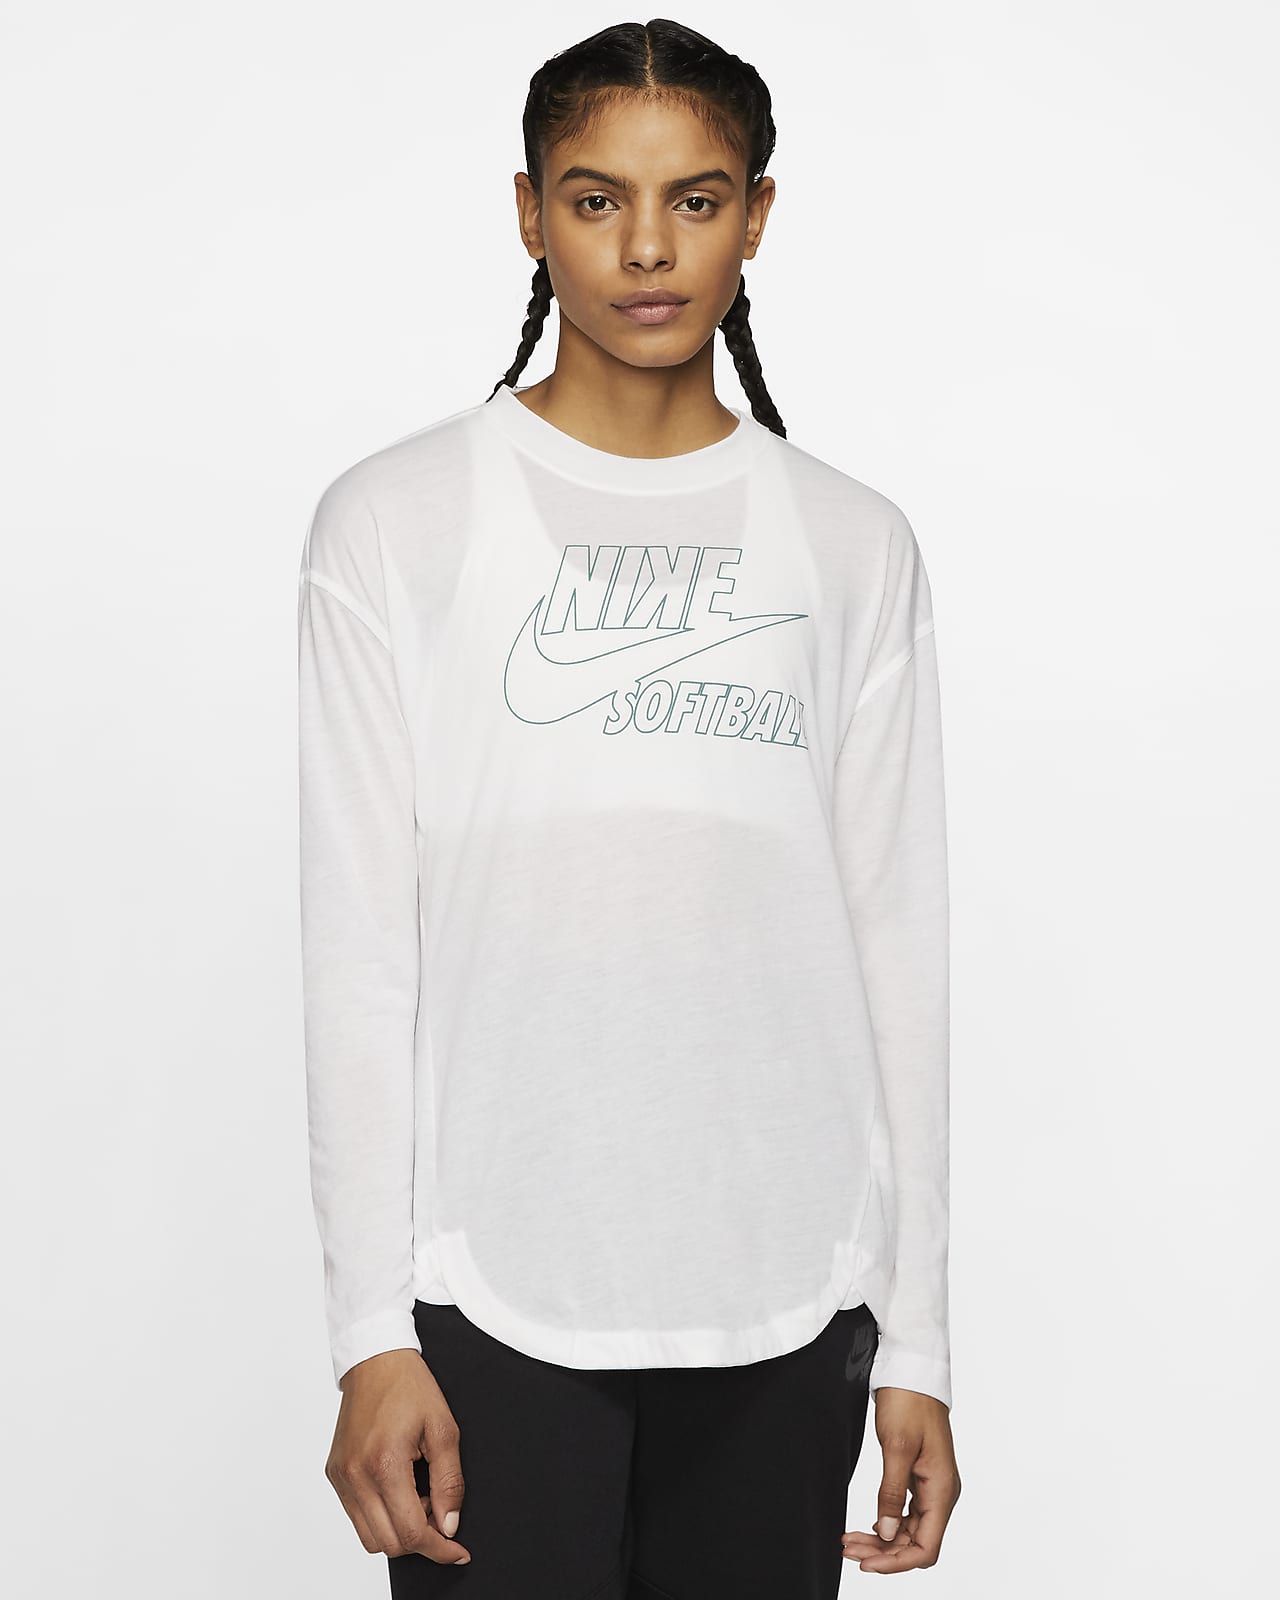 Nike Breathe Women's Long-Sleeve Softball Top